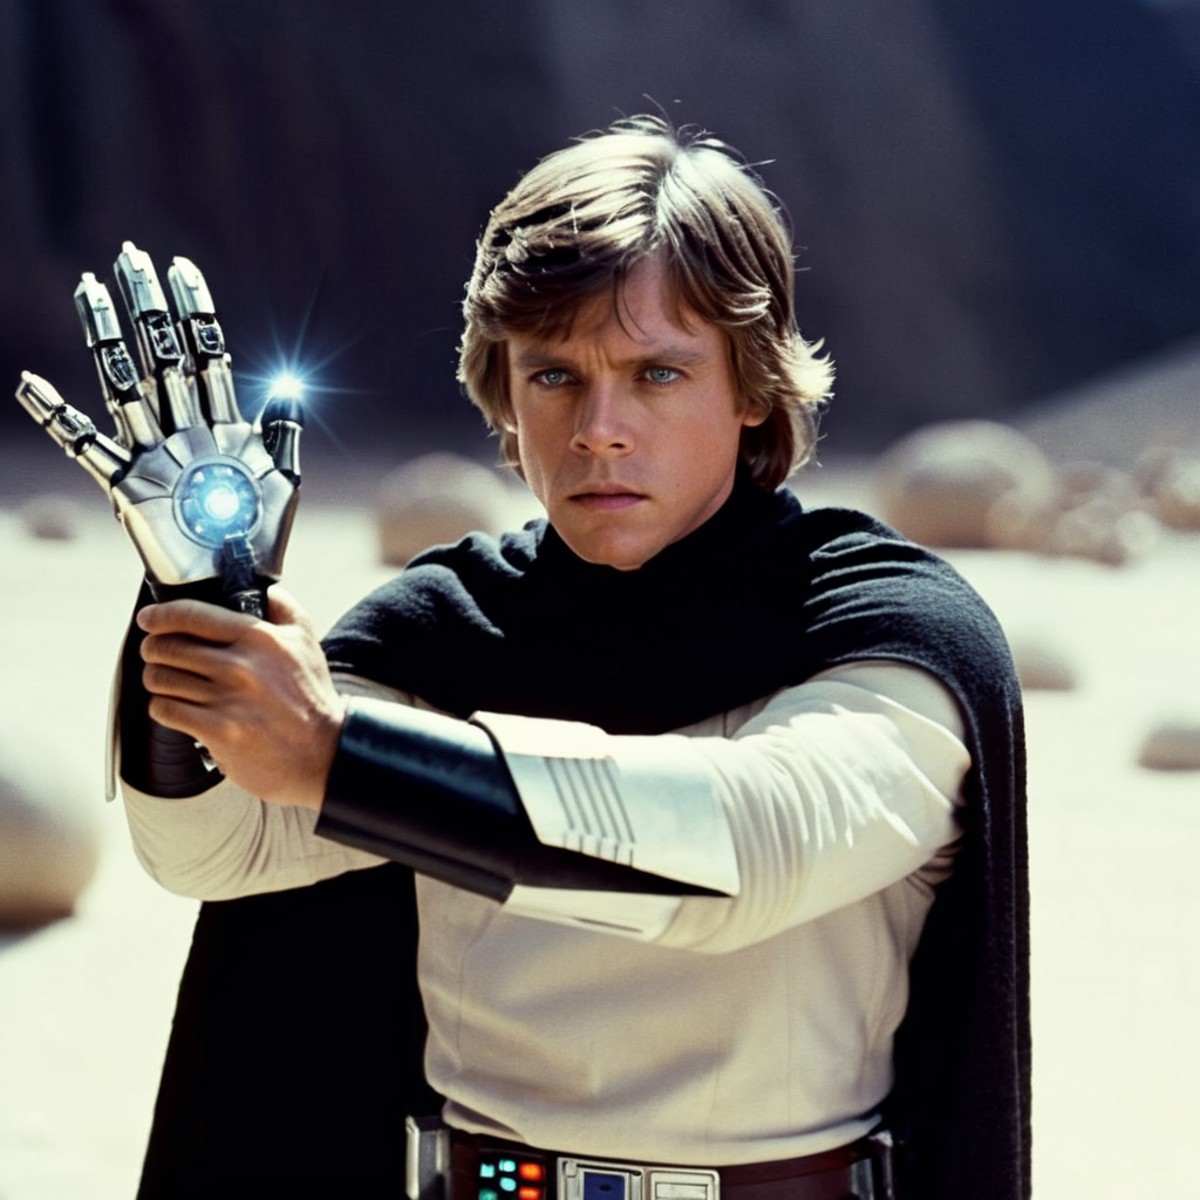 cinematic film still of  <lora:Luke Skywalker:1.2>
Luke Skywalker an man with a cape and futuristic cyborg hand in star wa...